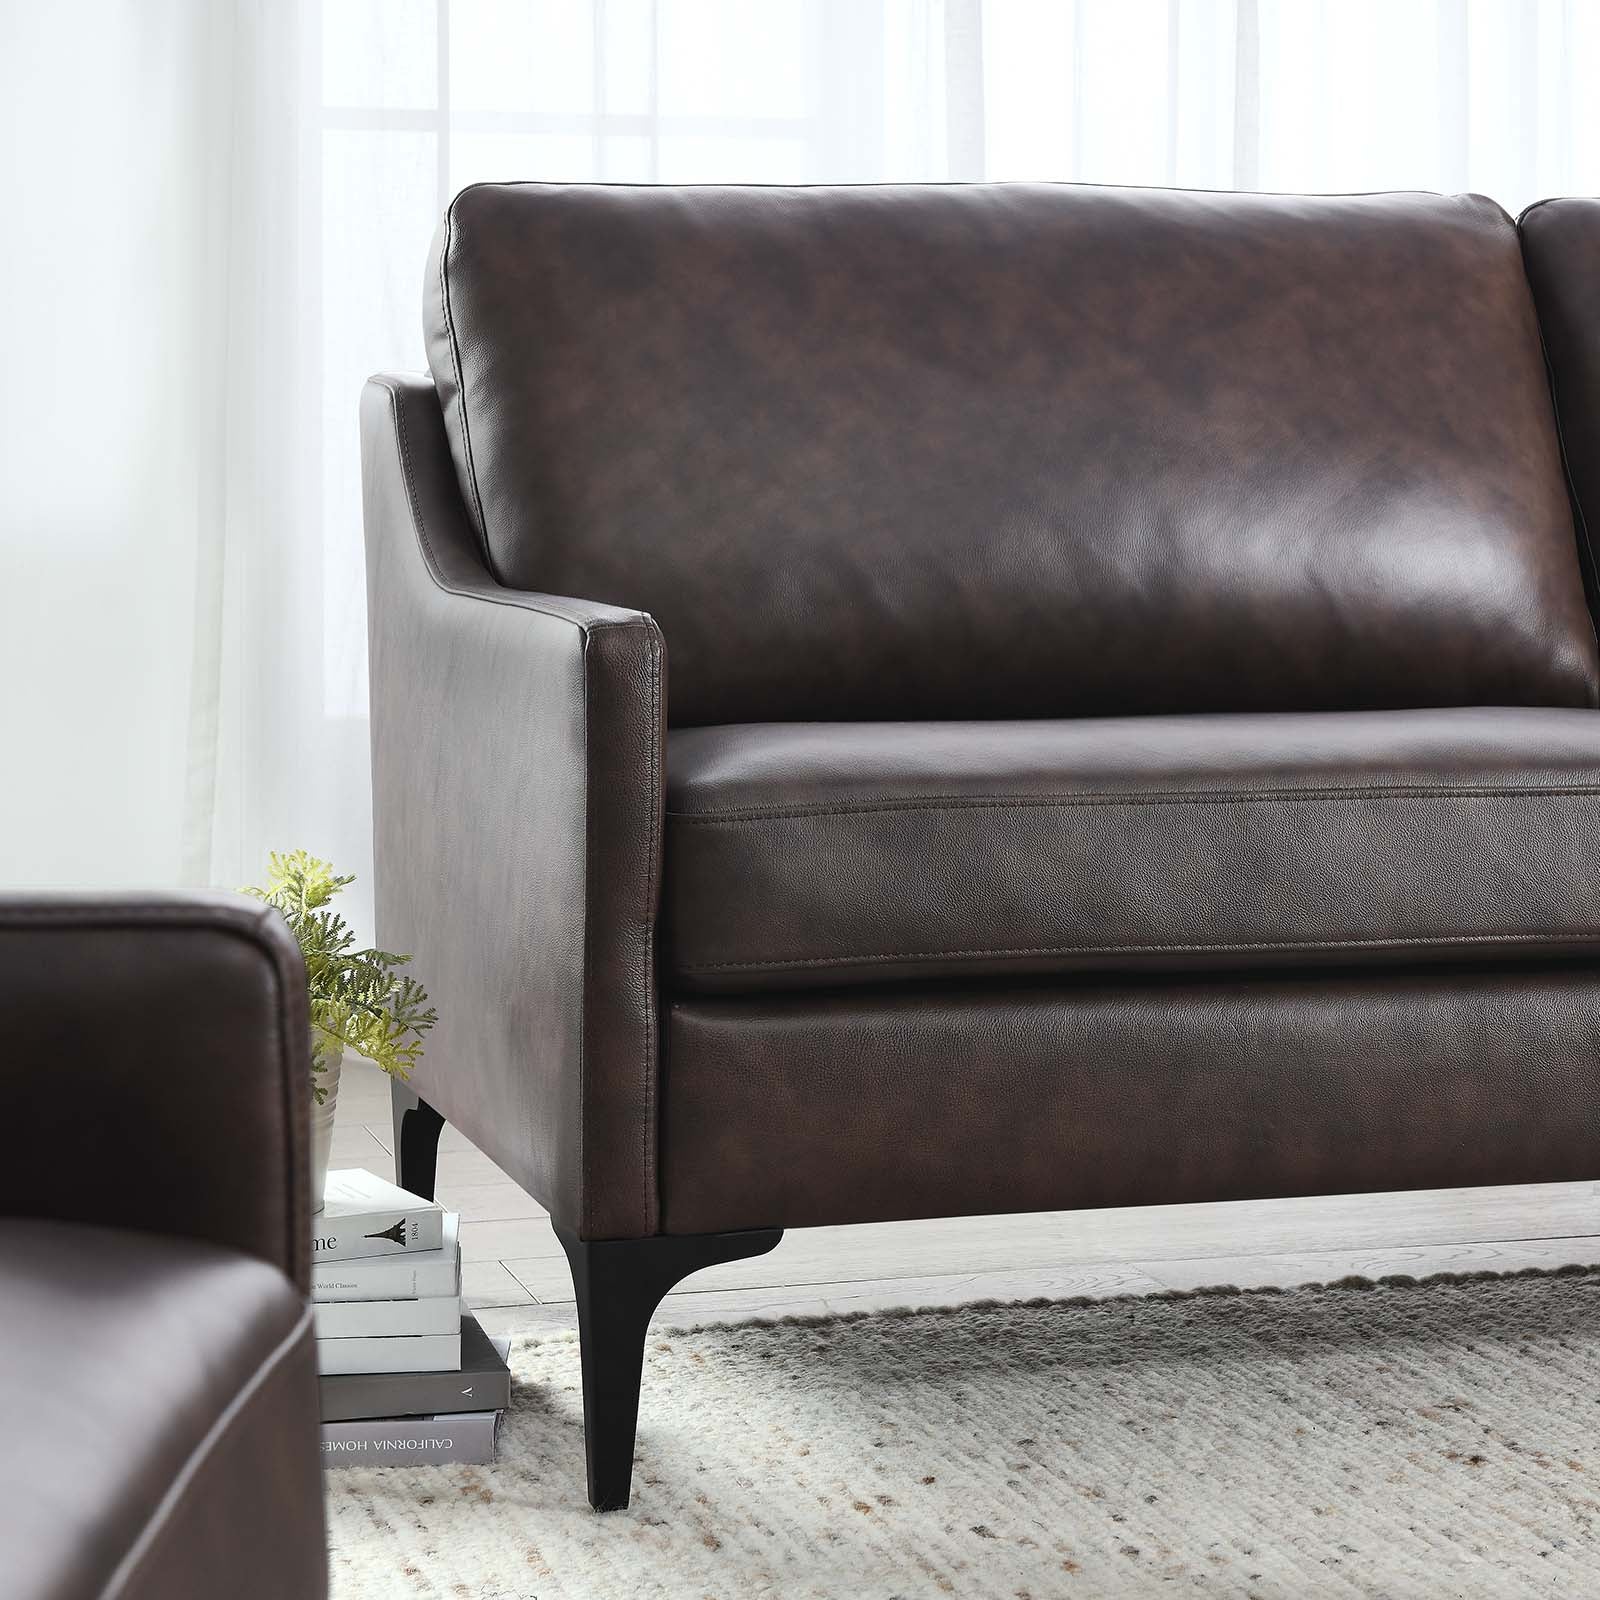 Corland Leather Sofa - East Shore Modern Home Furnishings